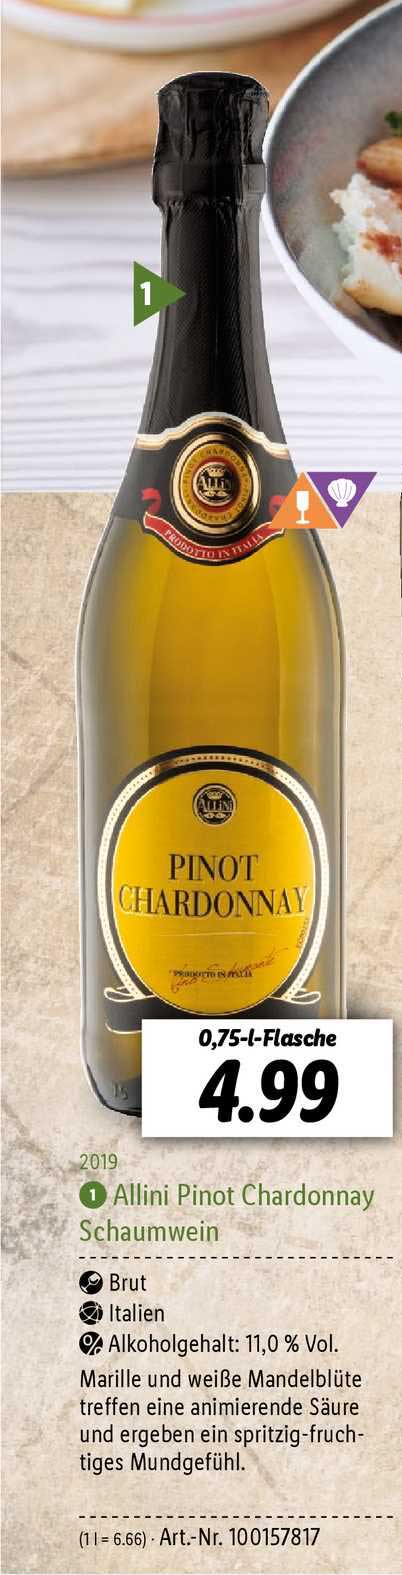 Allini Pinot Chardonnay bei Lidl Schaumwein Angebot